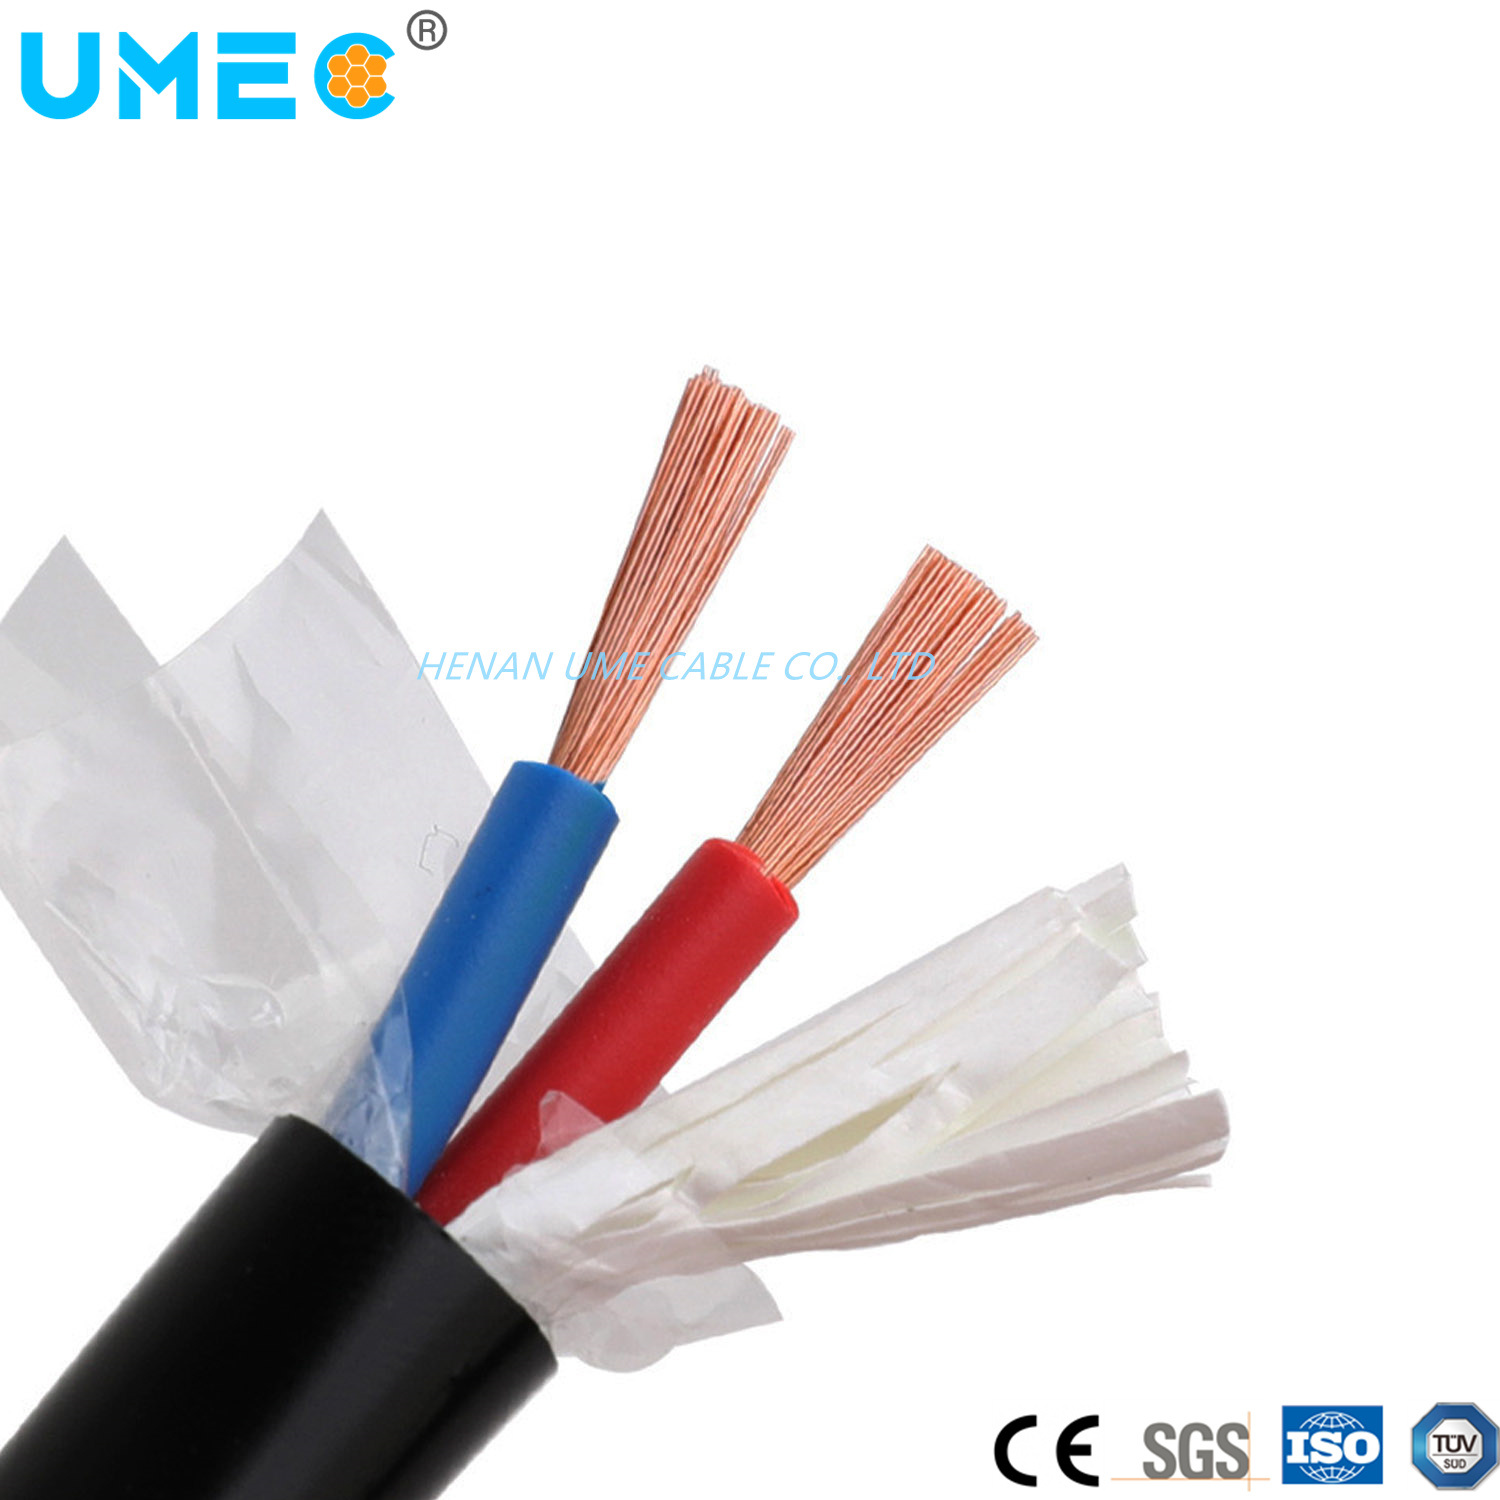 
                Elektrischer Lieferant Flexible Kabel Kupferkern PVC isolierte Draht ummantelt Elektrische Verkabelung des Kabelhauses 1,5mm 2,5mm 4mm 6mm RVV Myym H05VV-F
            